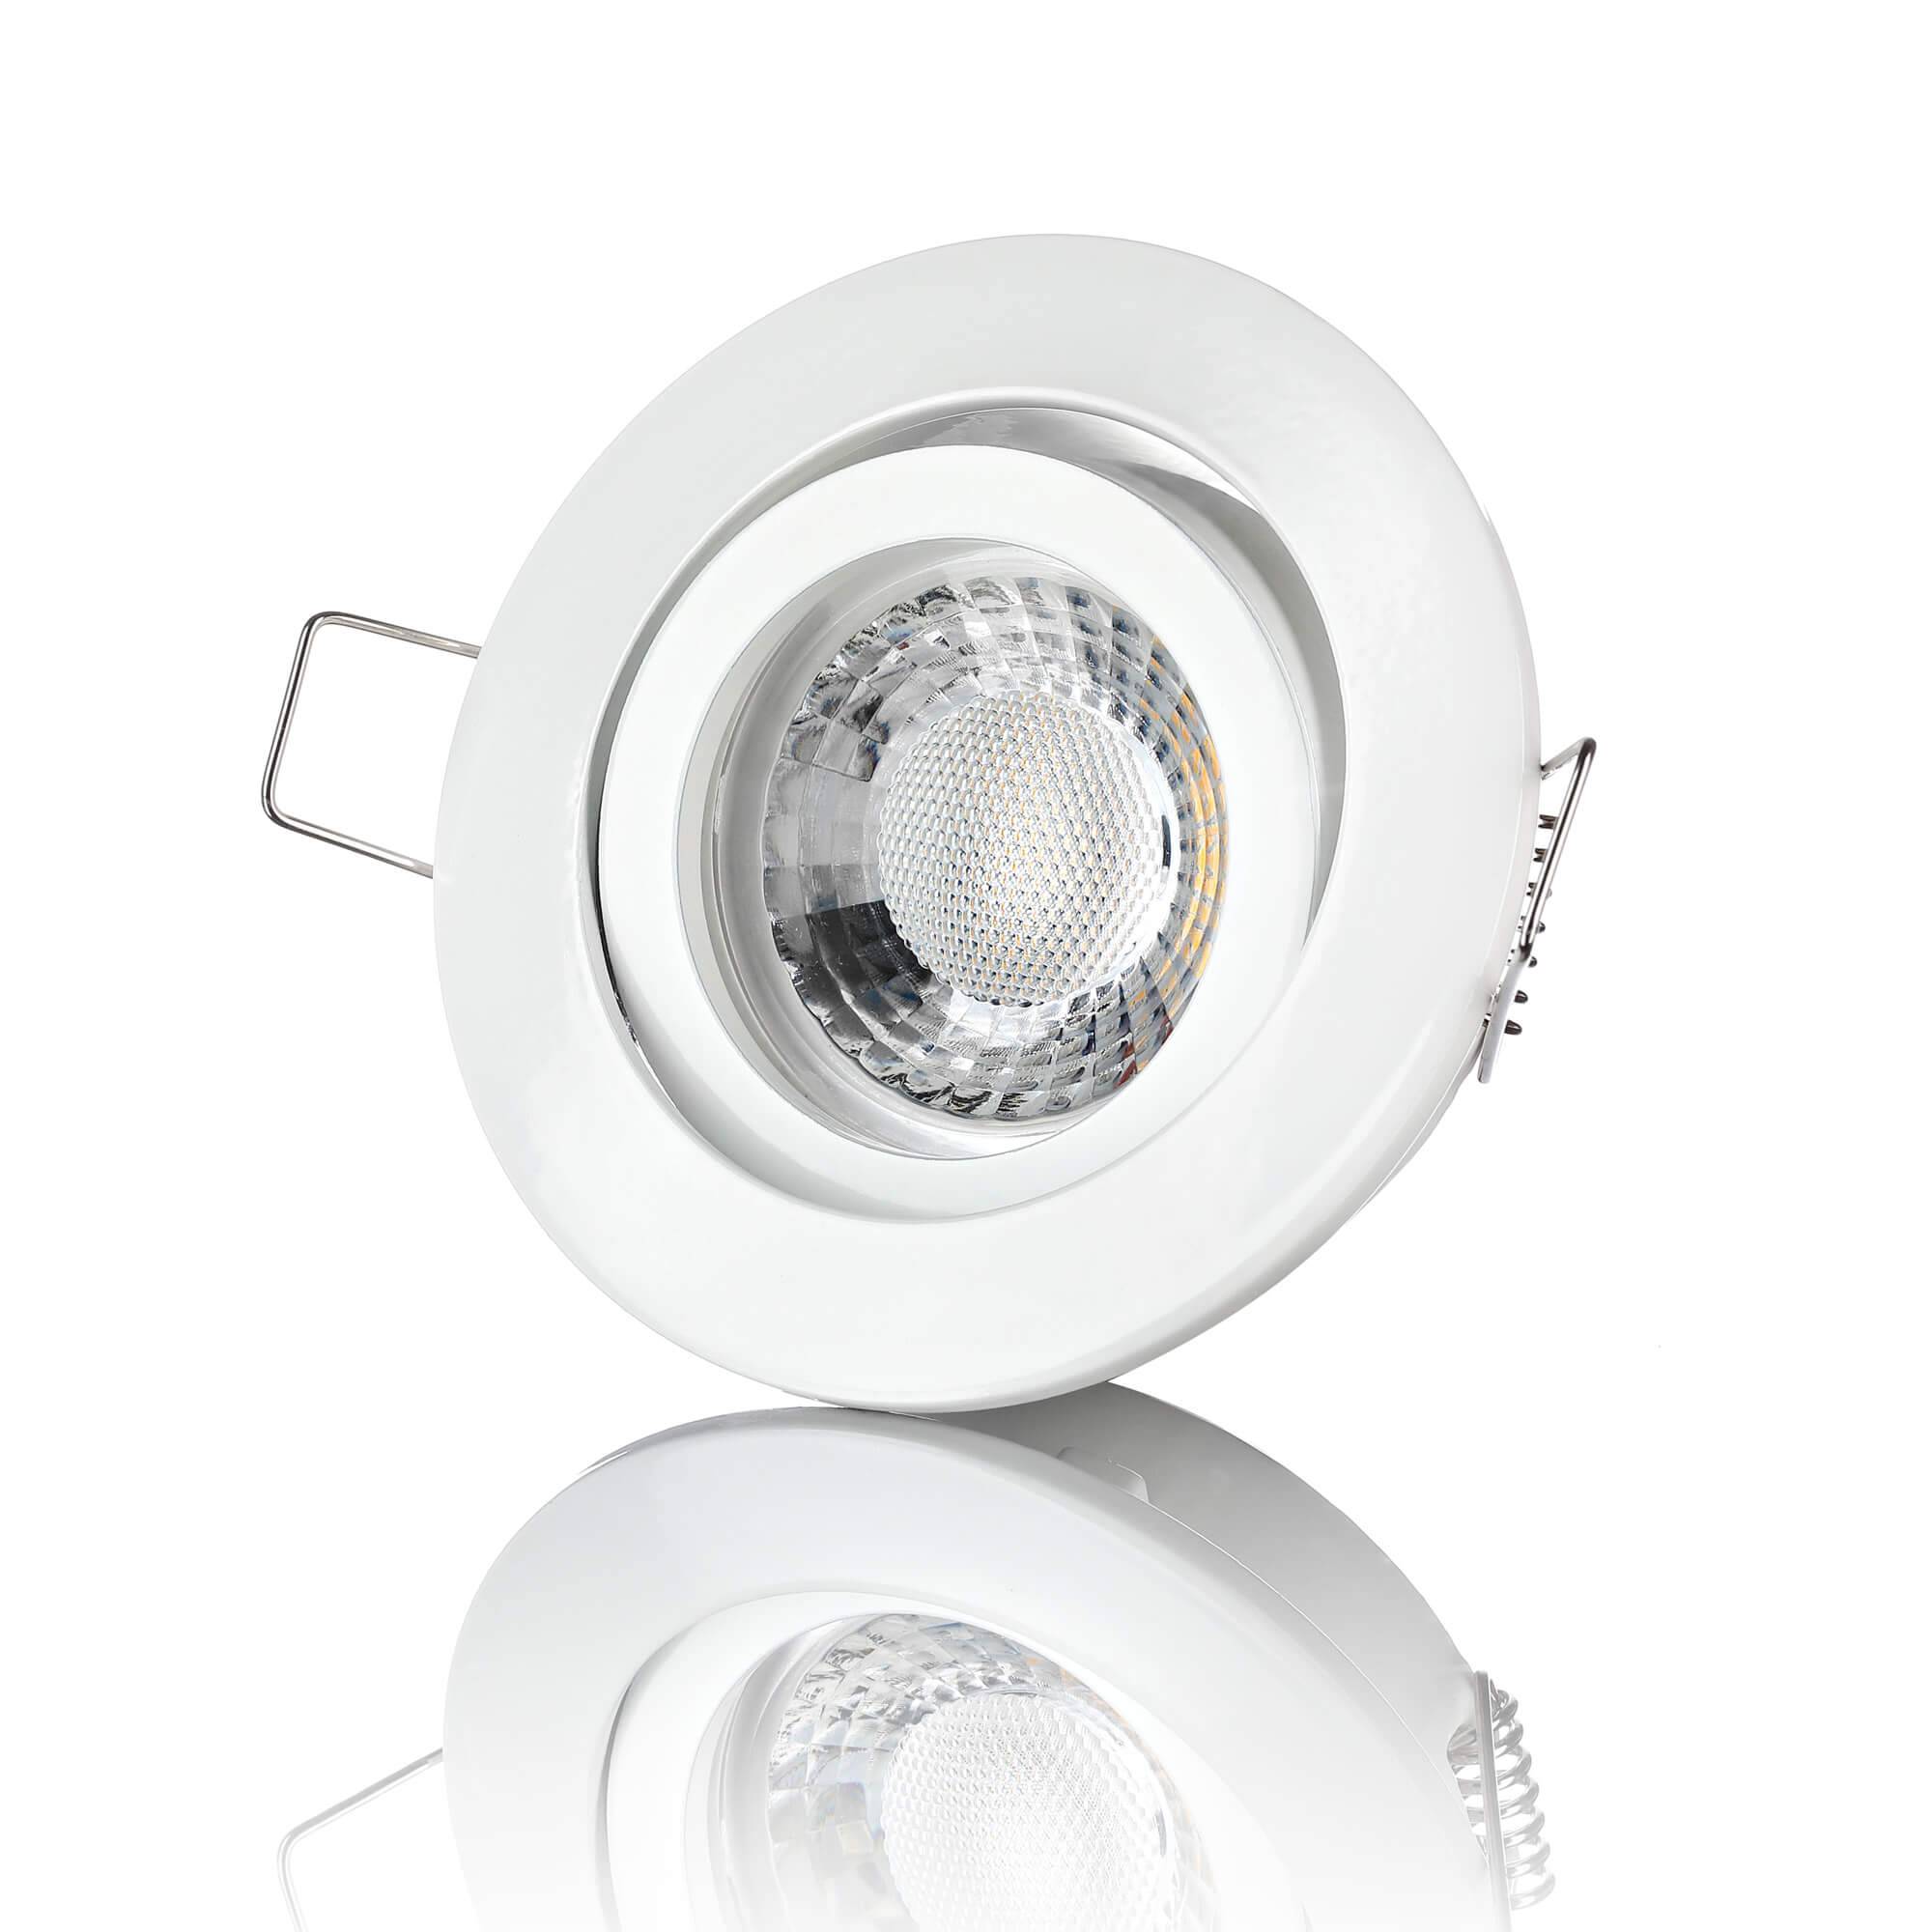 LED Einbaustrahler Dimmbar - Weiß Rund 5W GU10 LED - Rapid